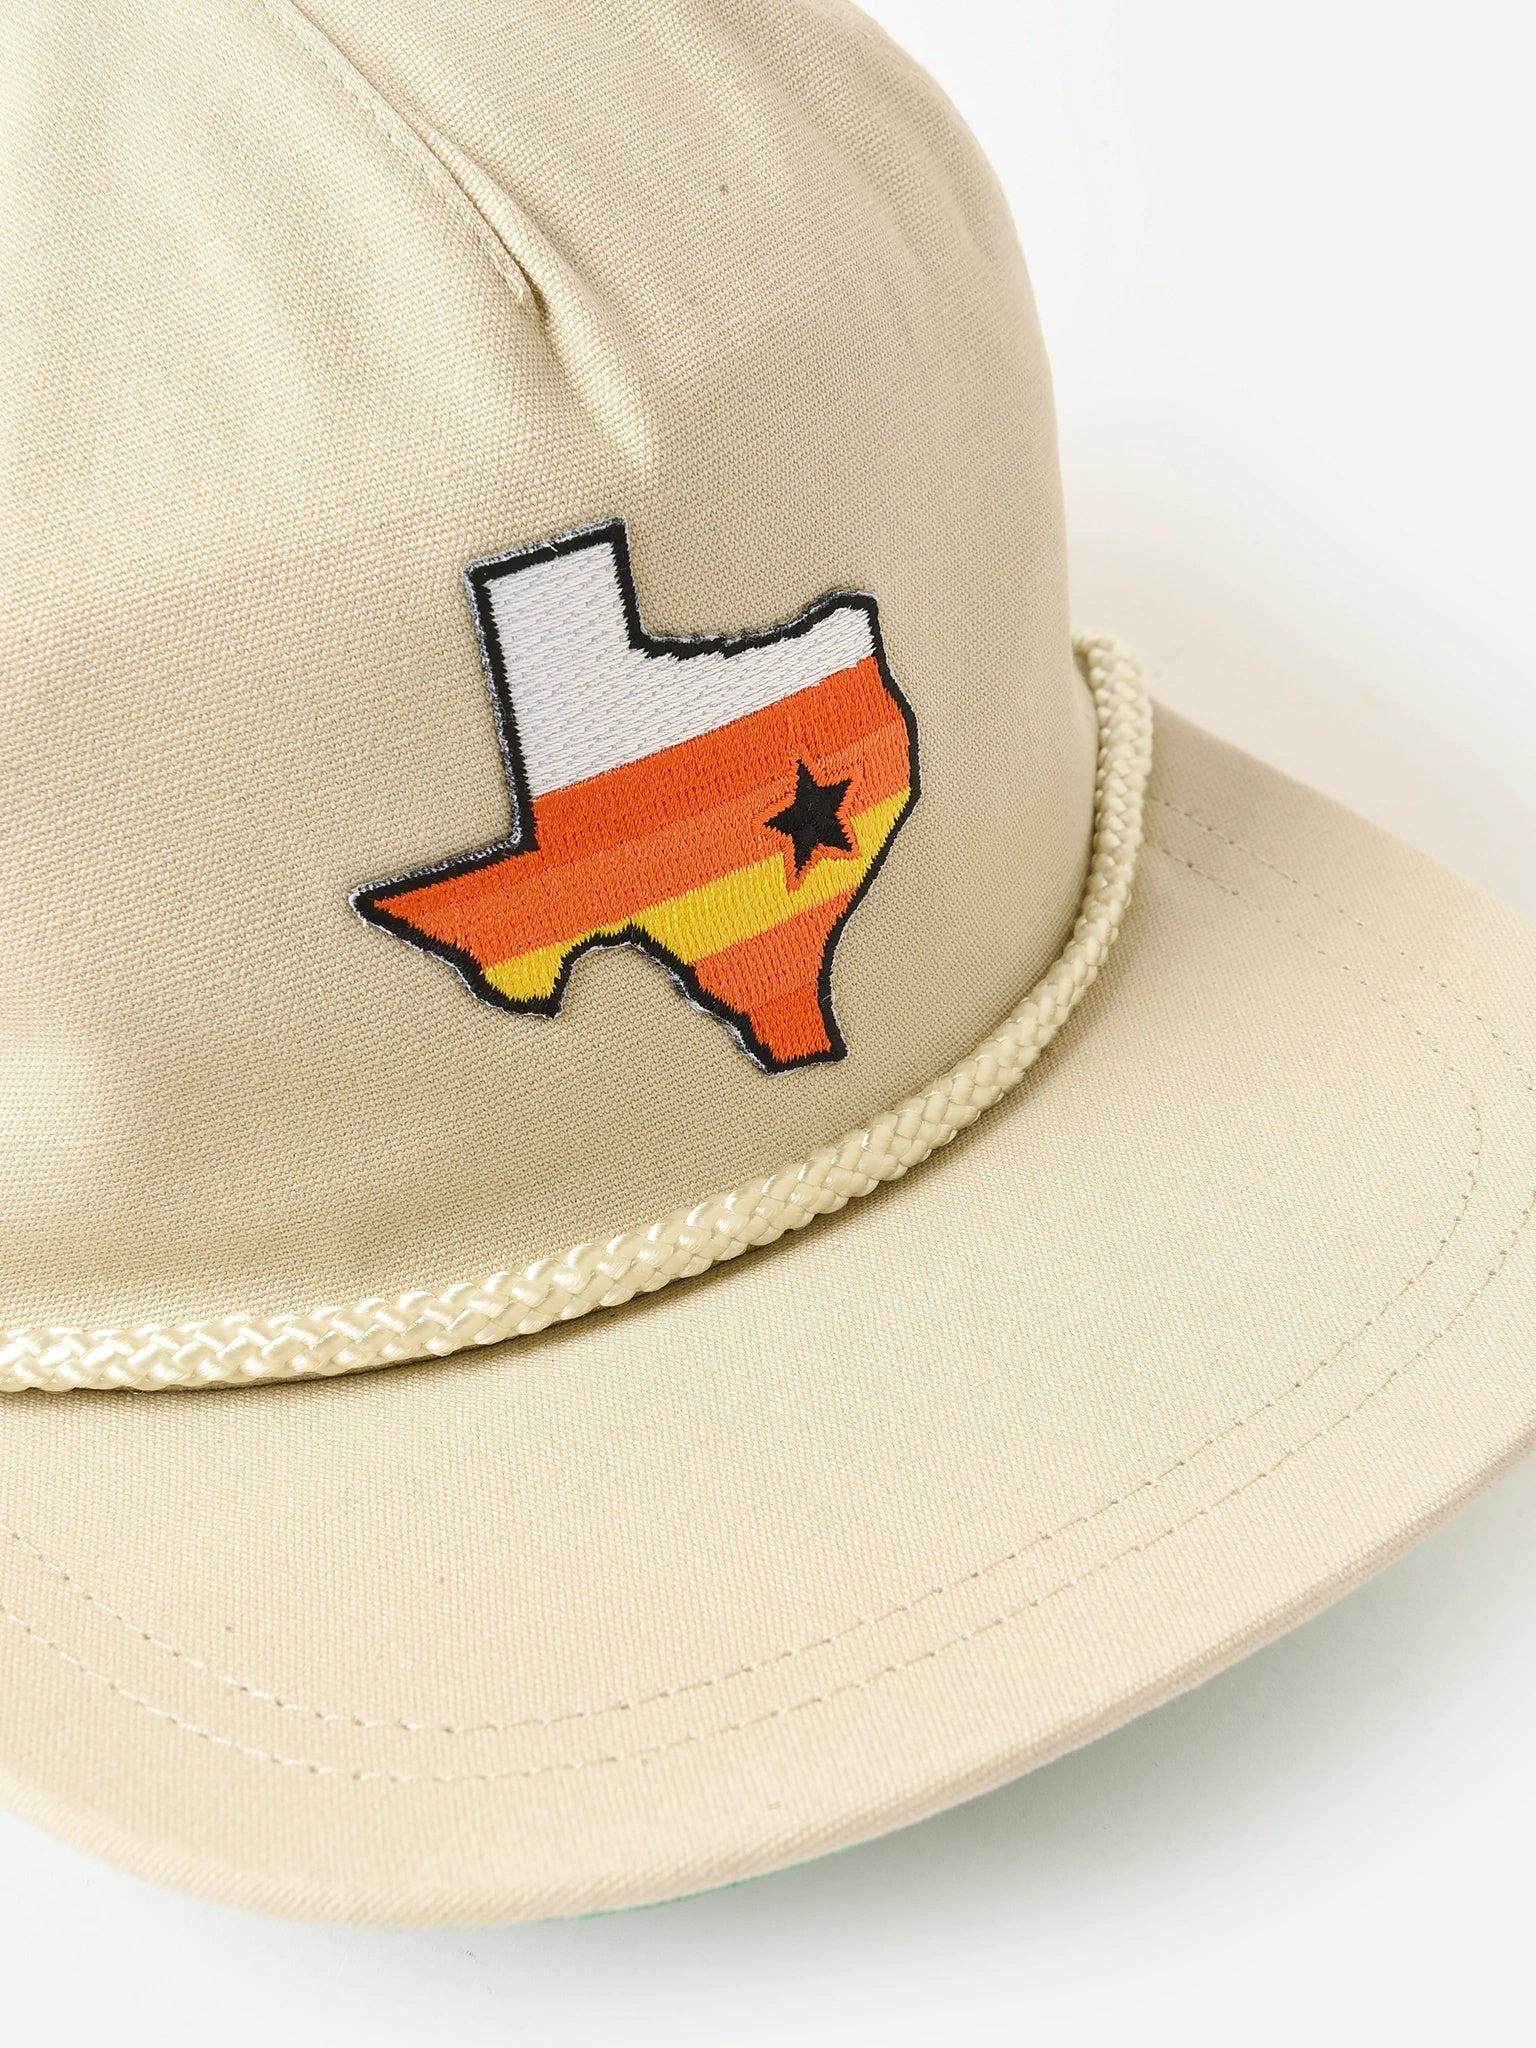 Houston Astros Bucket Hat 